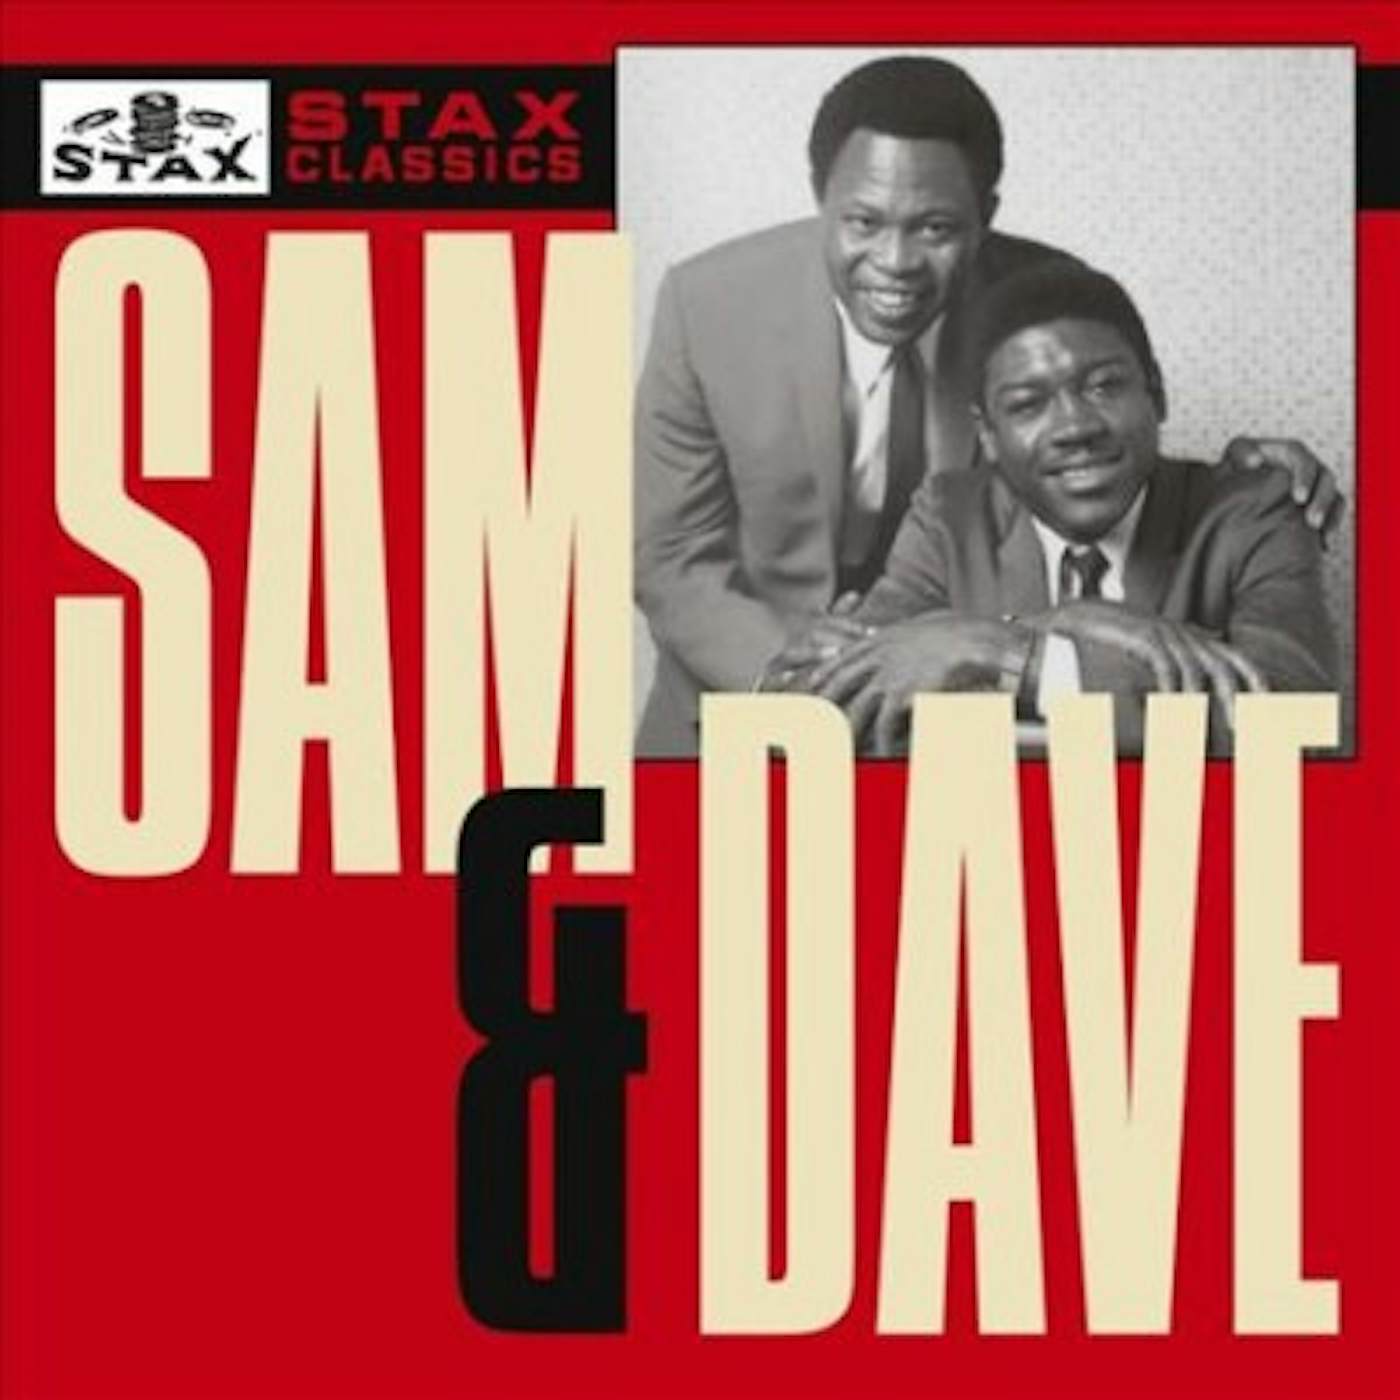 Sam & Dave Stax Classics CD